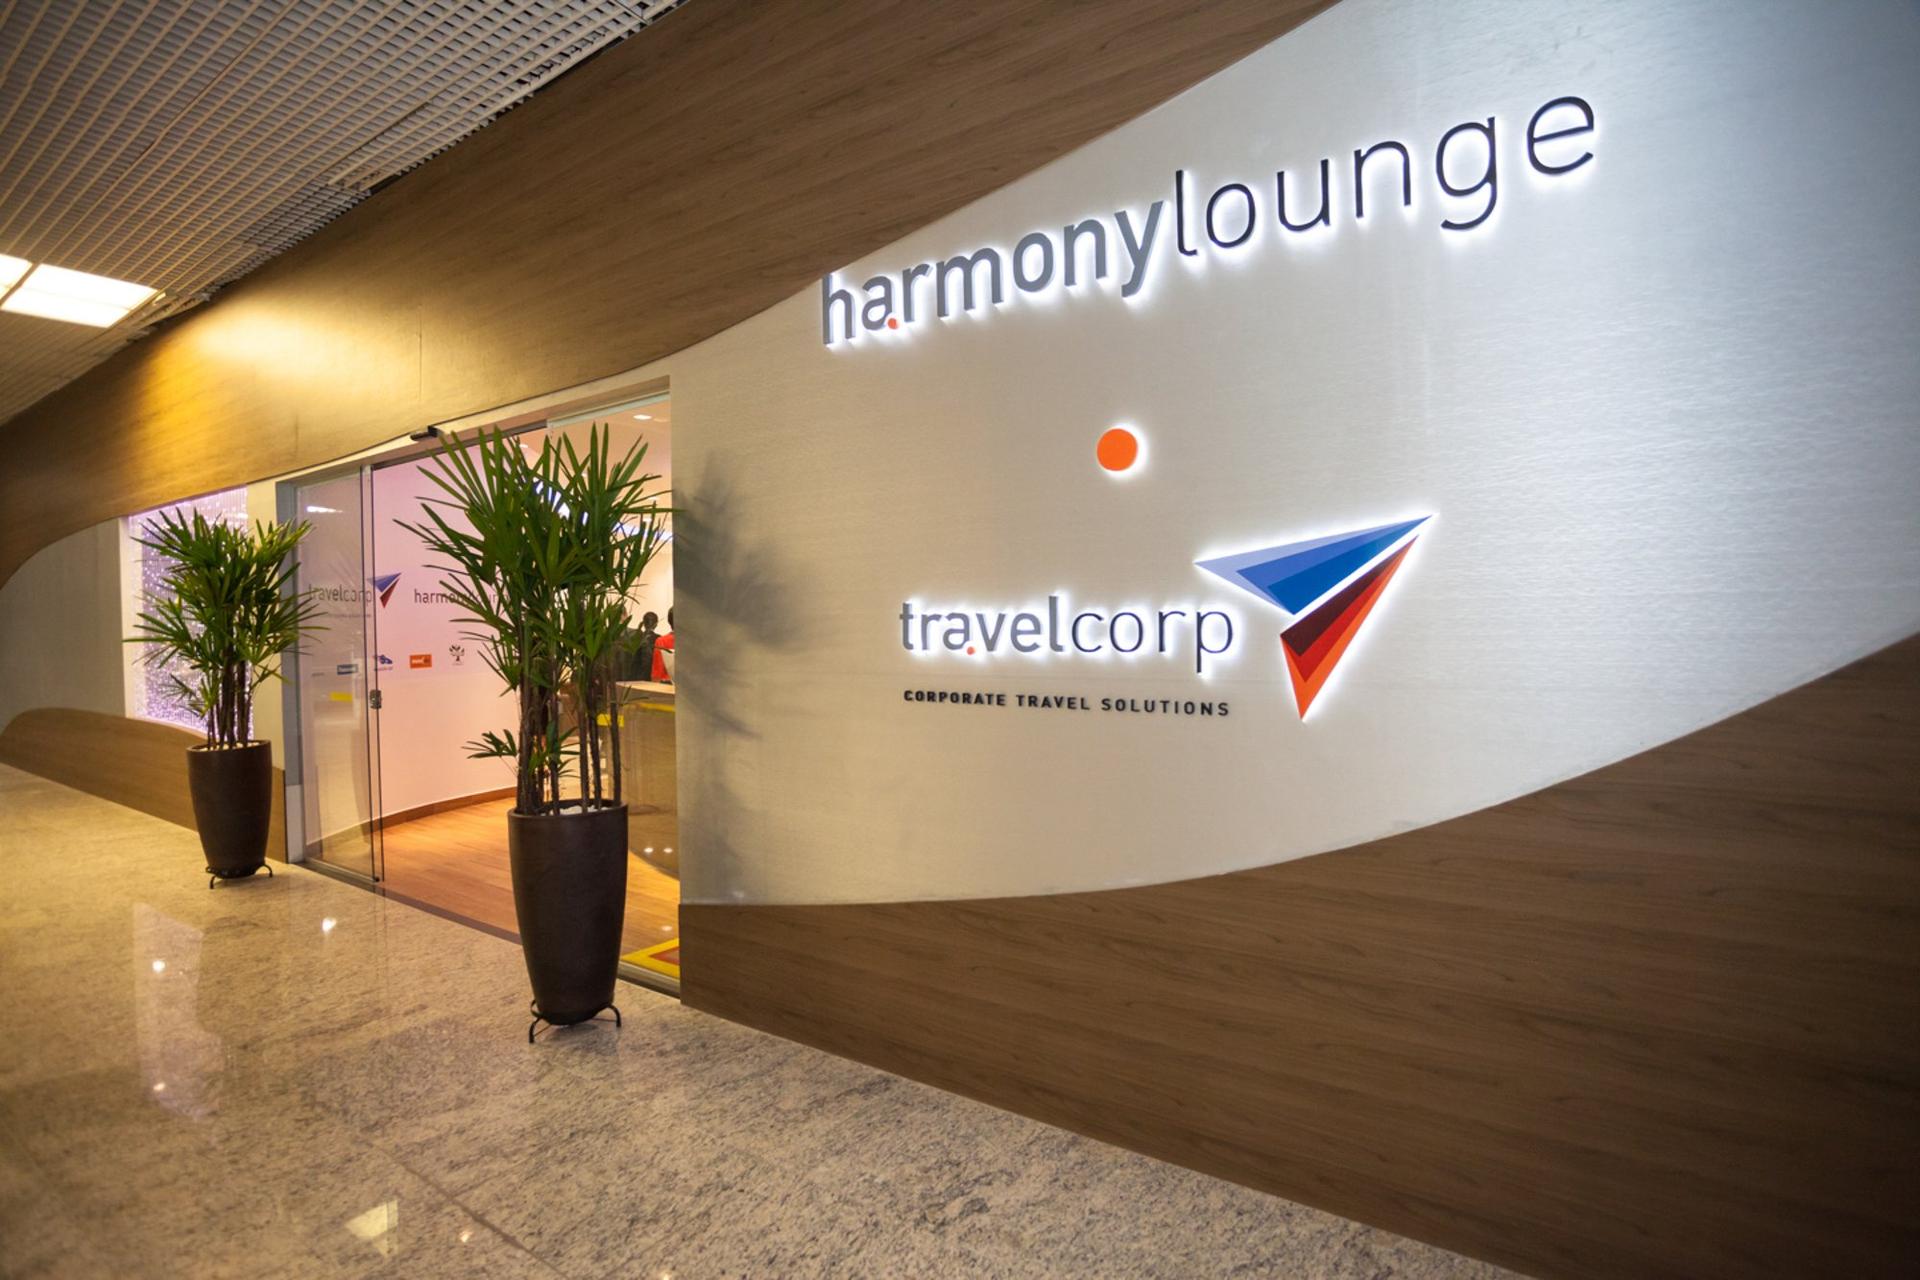 TravelCorp Harmony Lounge image 18 of 31